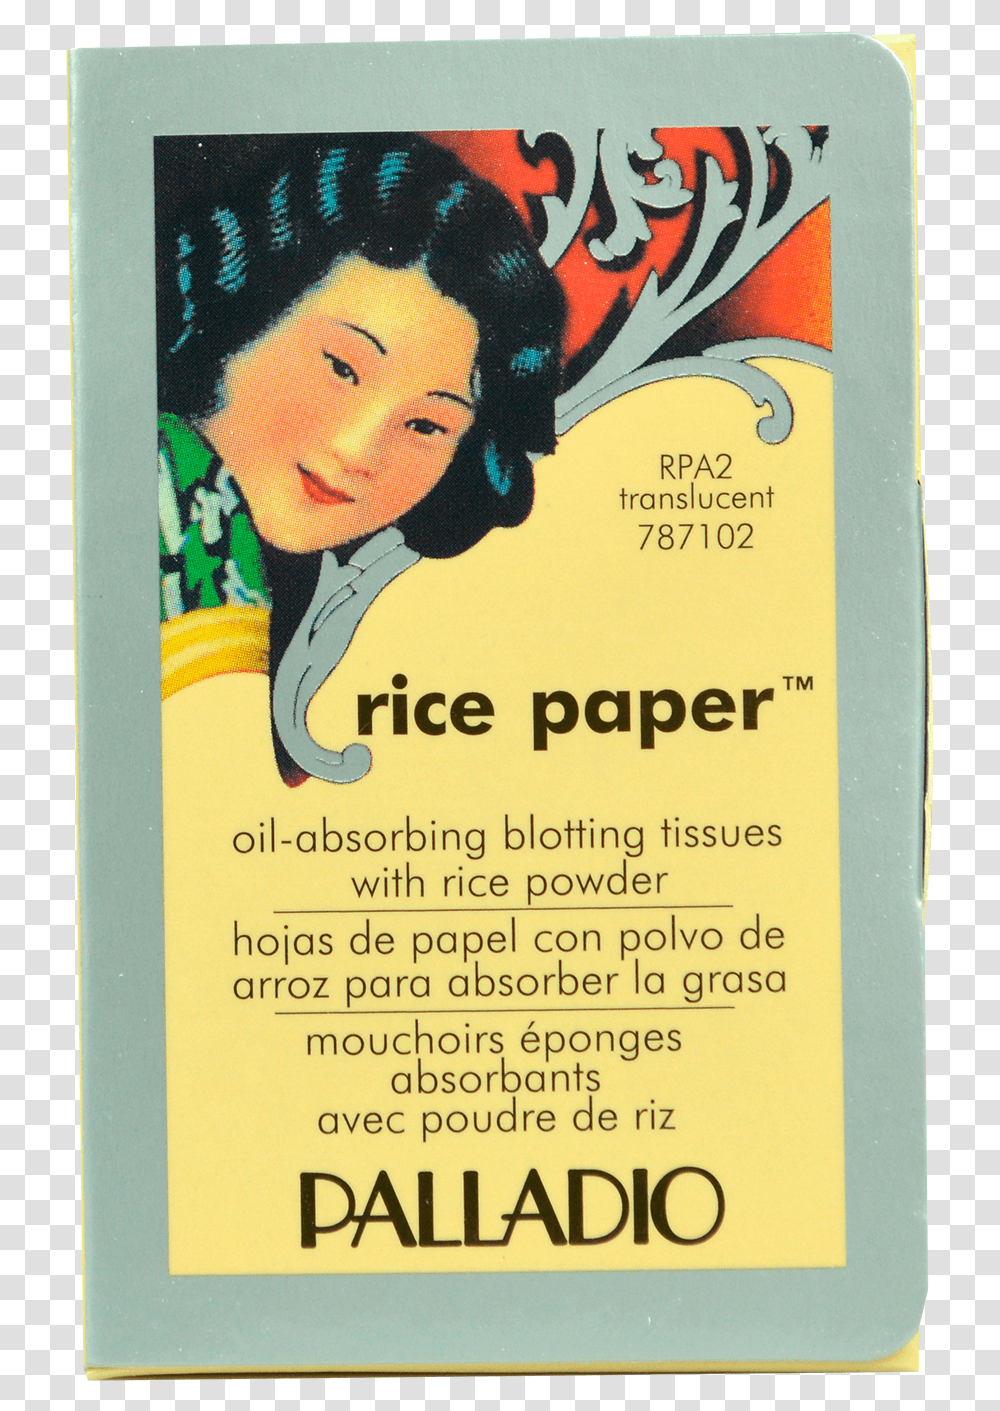 Papel Absorbente Con Polvo De Arroz Translucent Rice Paper For The Face, Poster, Advertisement, Flyer, Brochure Transparent Png